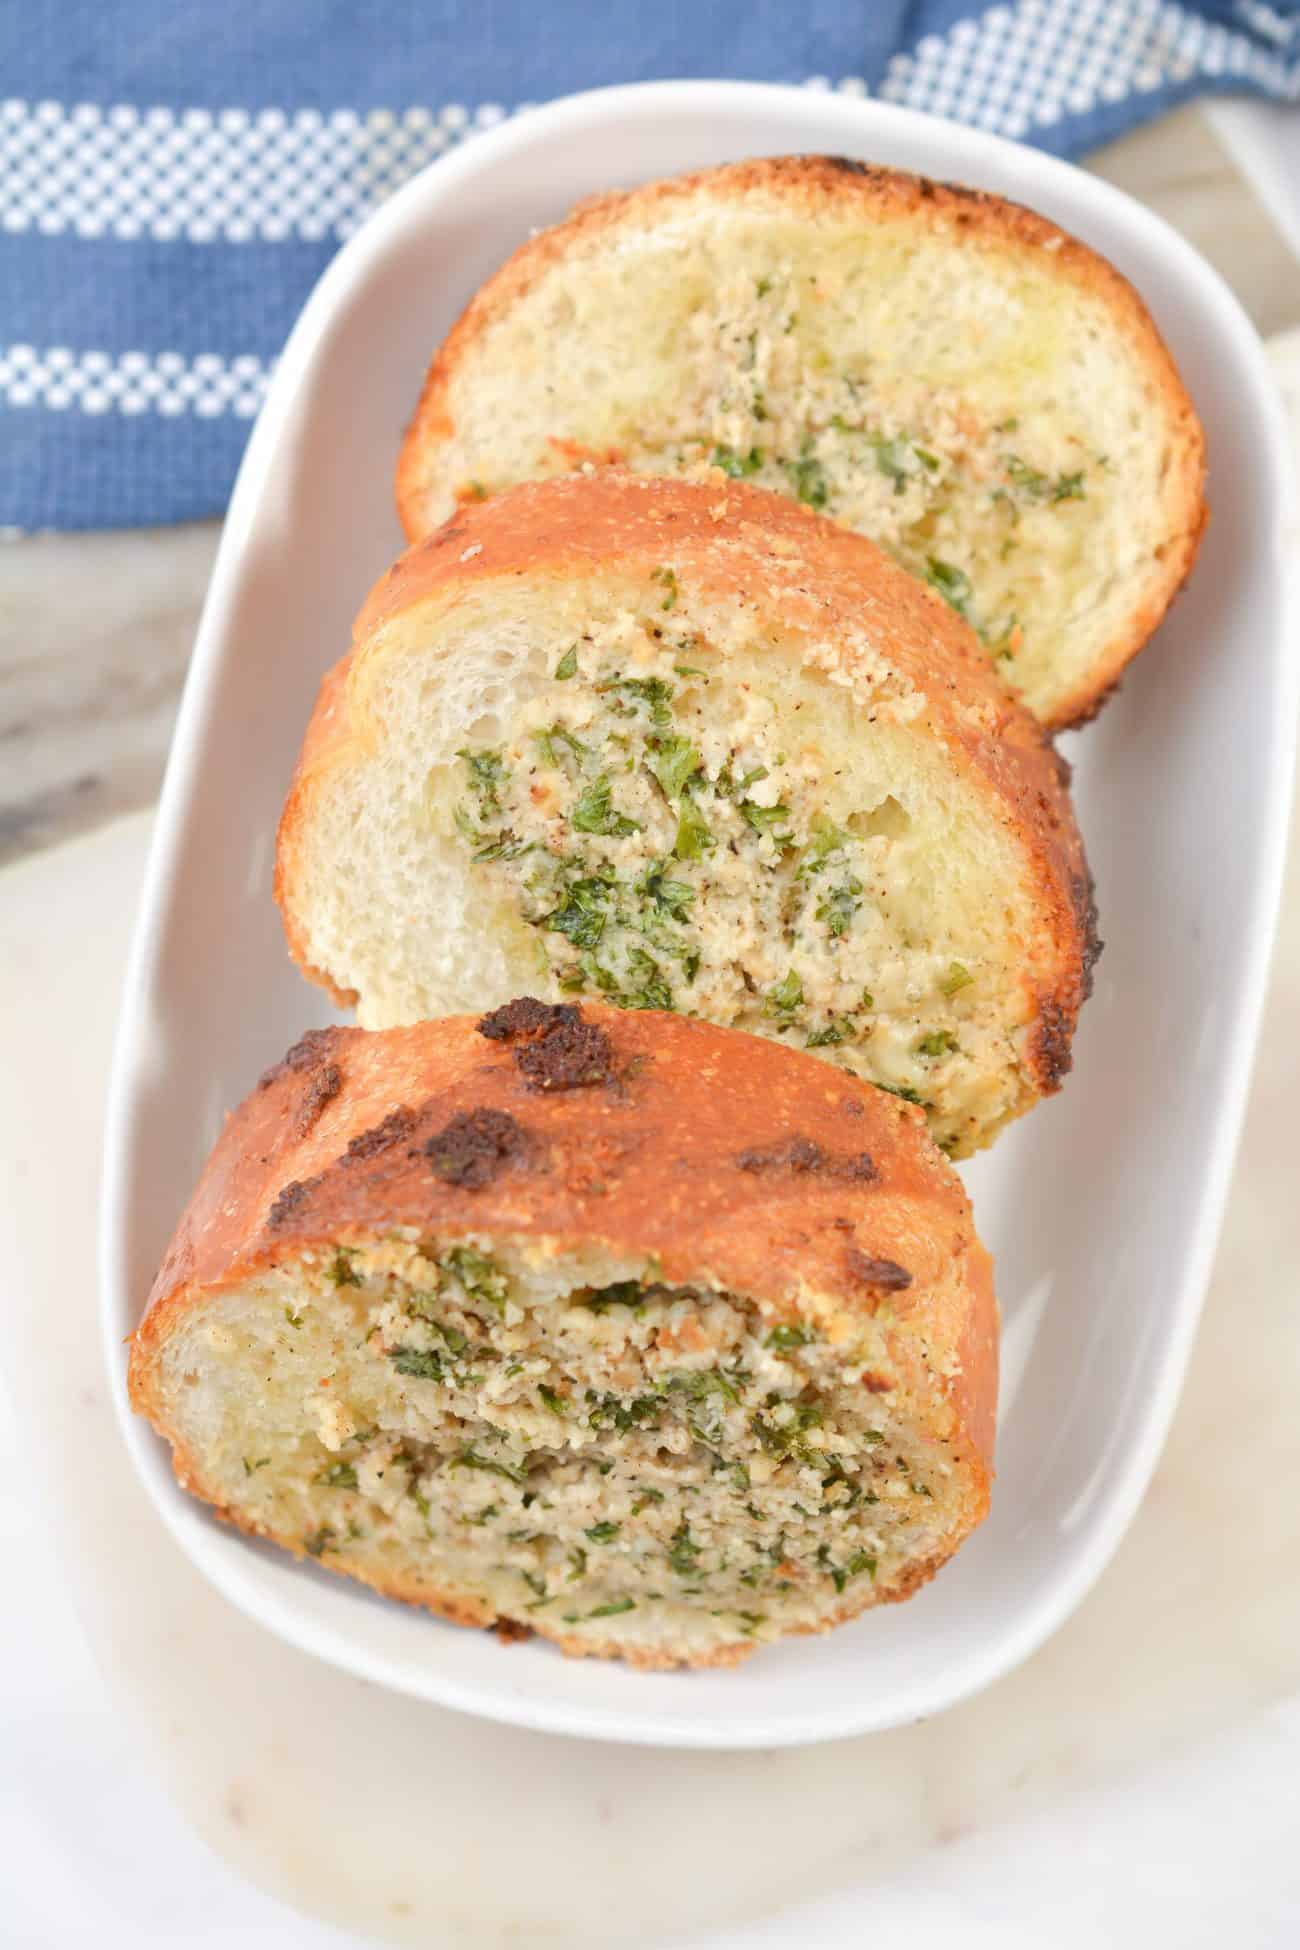  Stuffed garlic bread